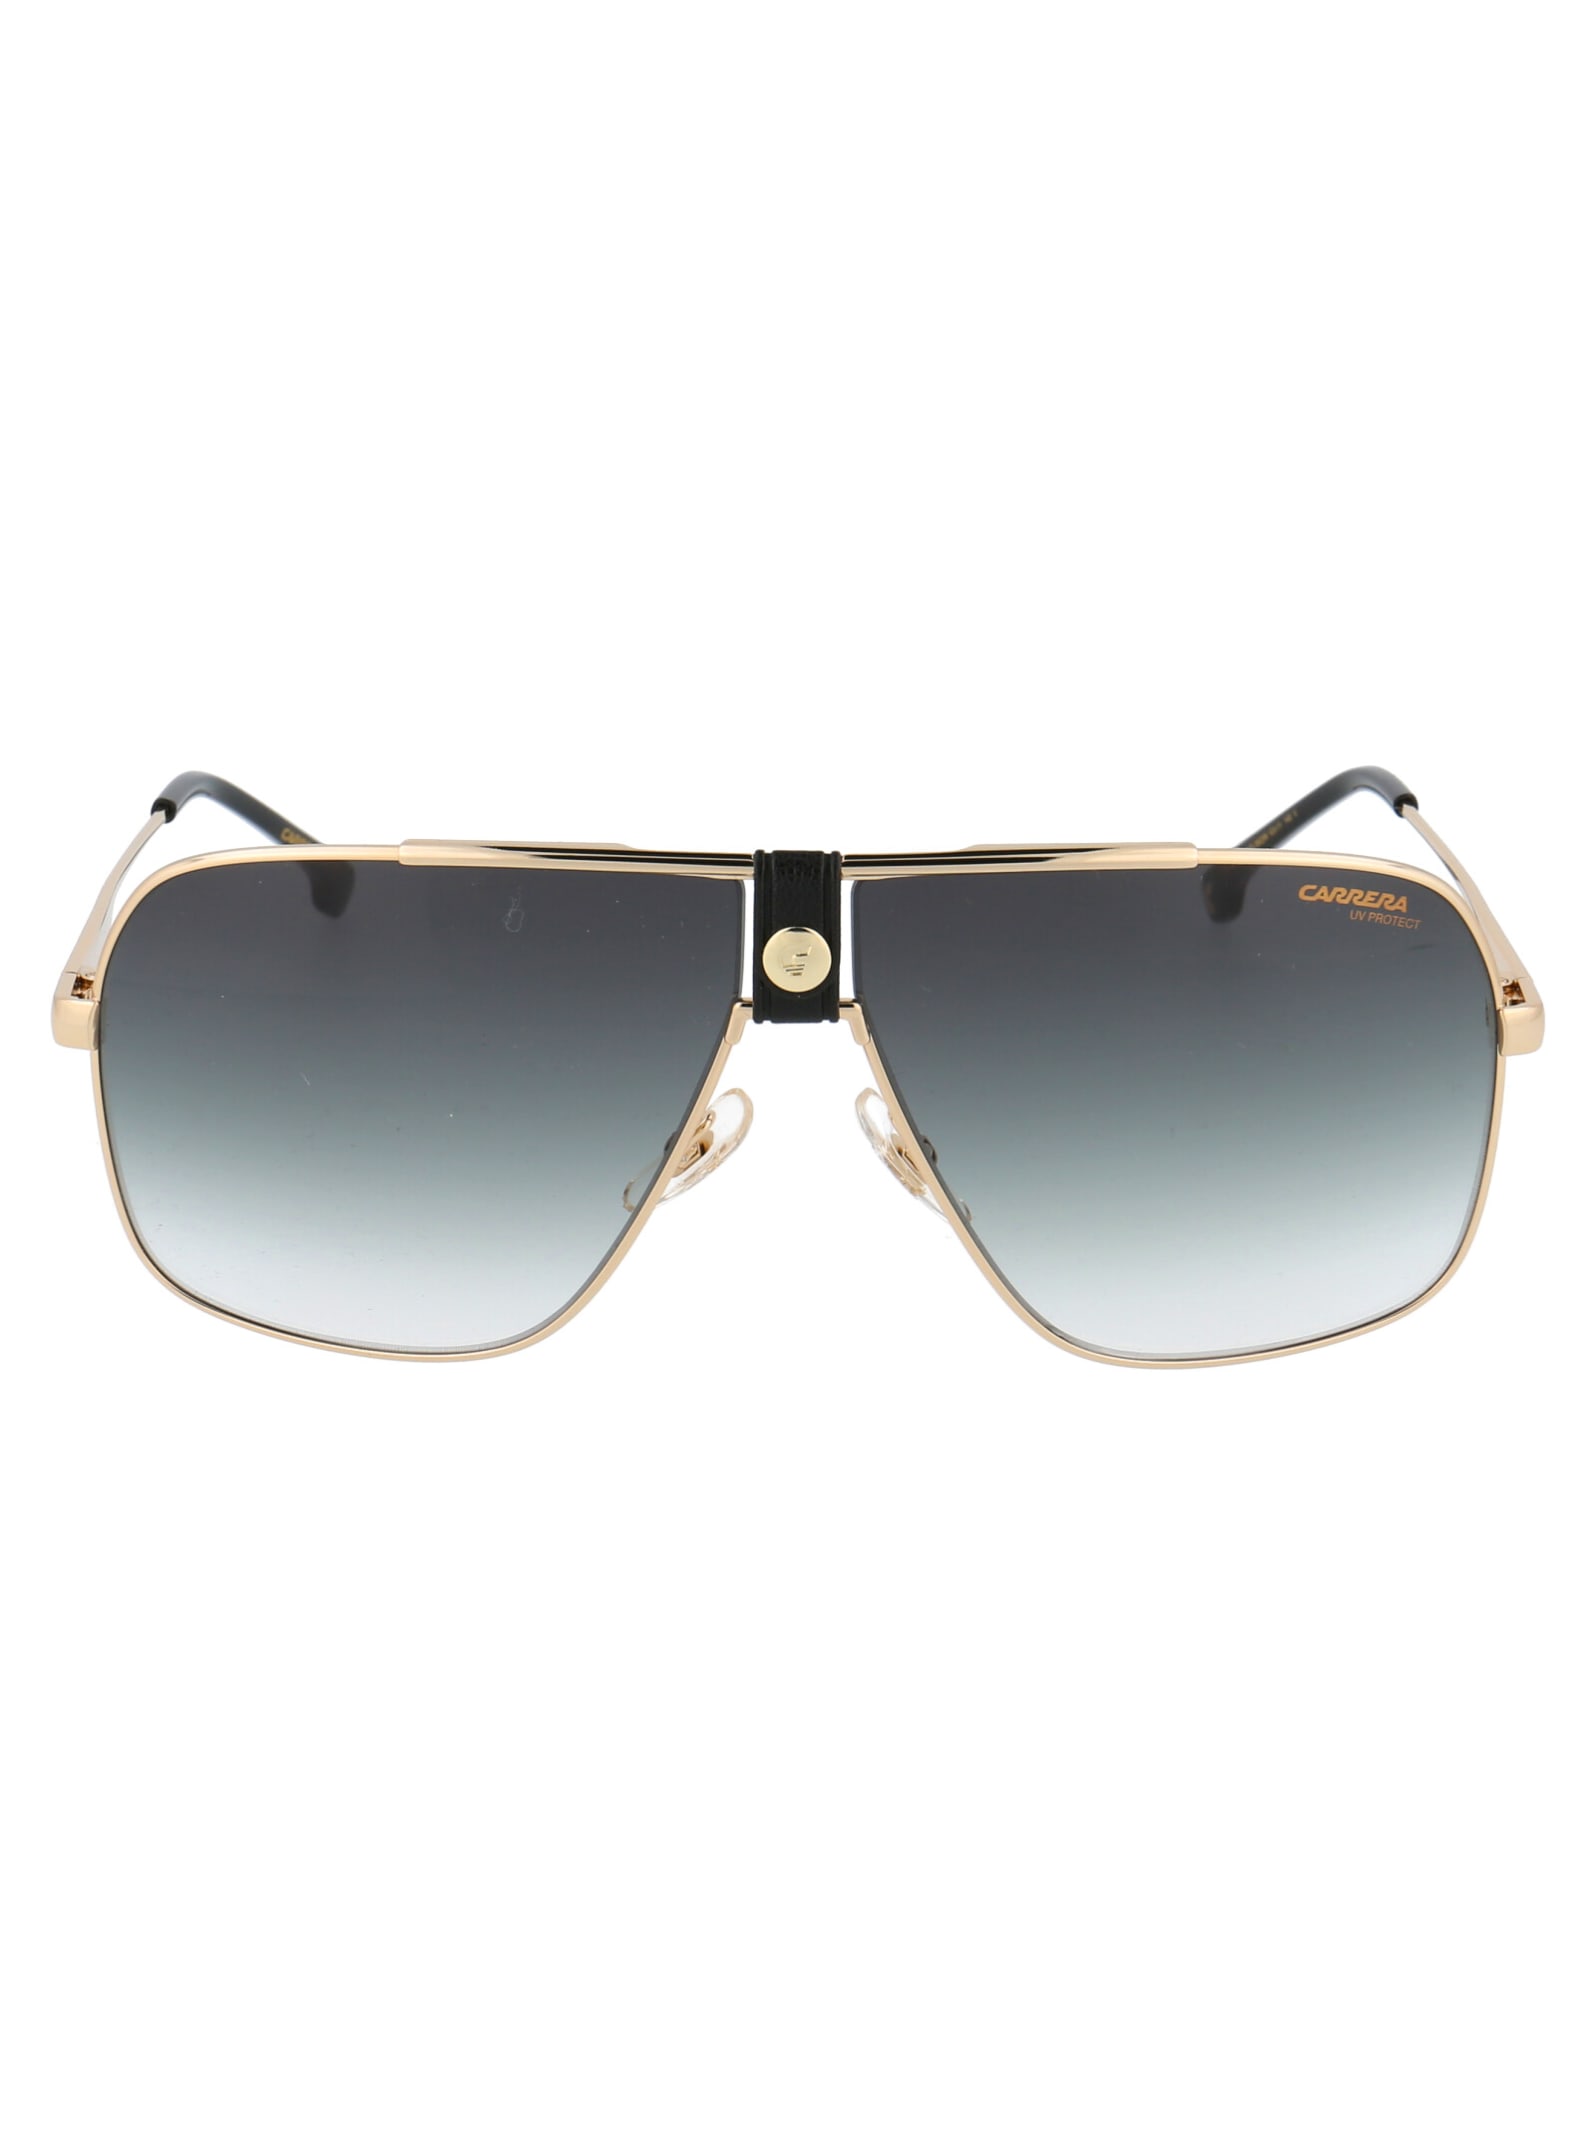 Carrera 1018/s Sunglasses